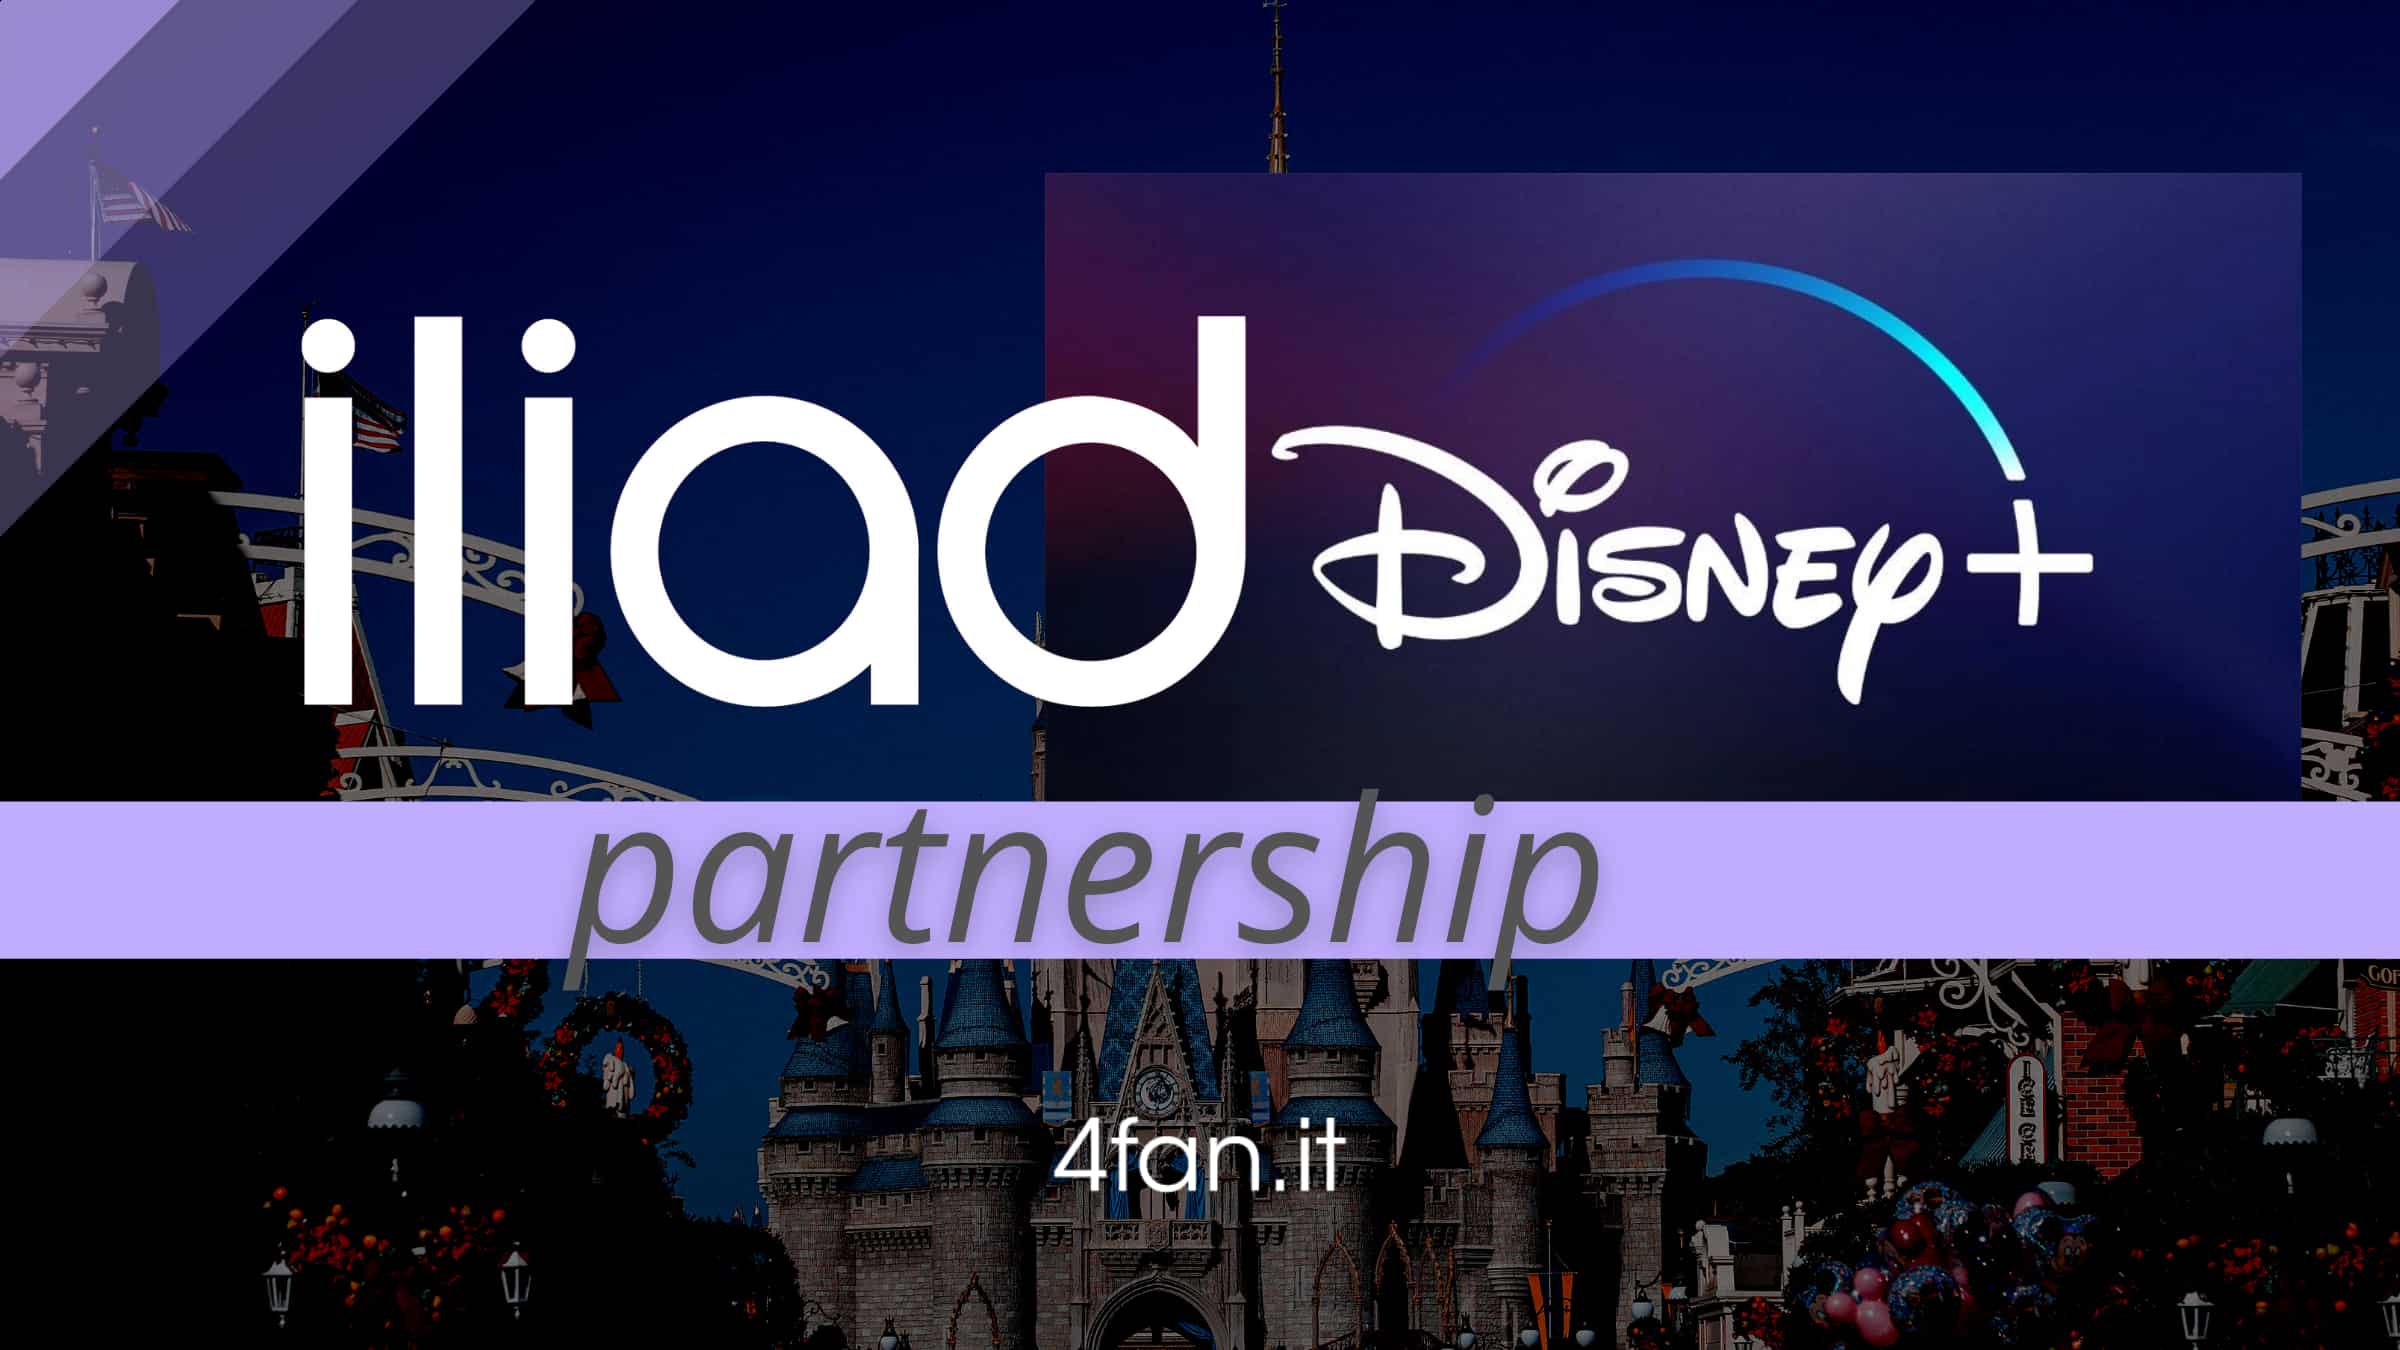 Iliad Disney Plus partnership